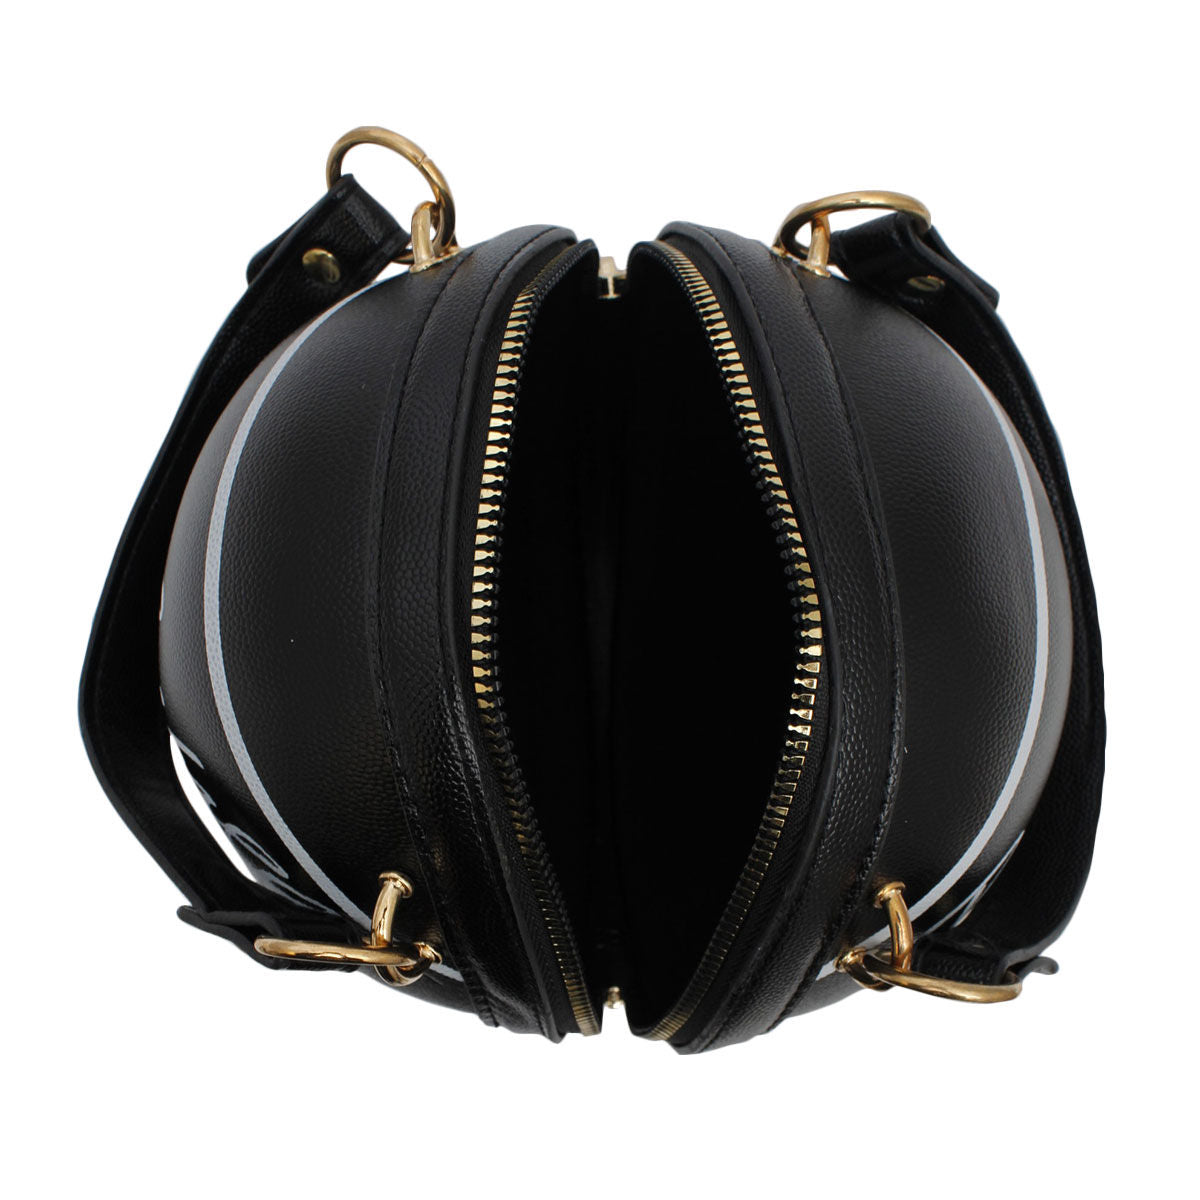 Clutch Black Basketball Bag for Women